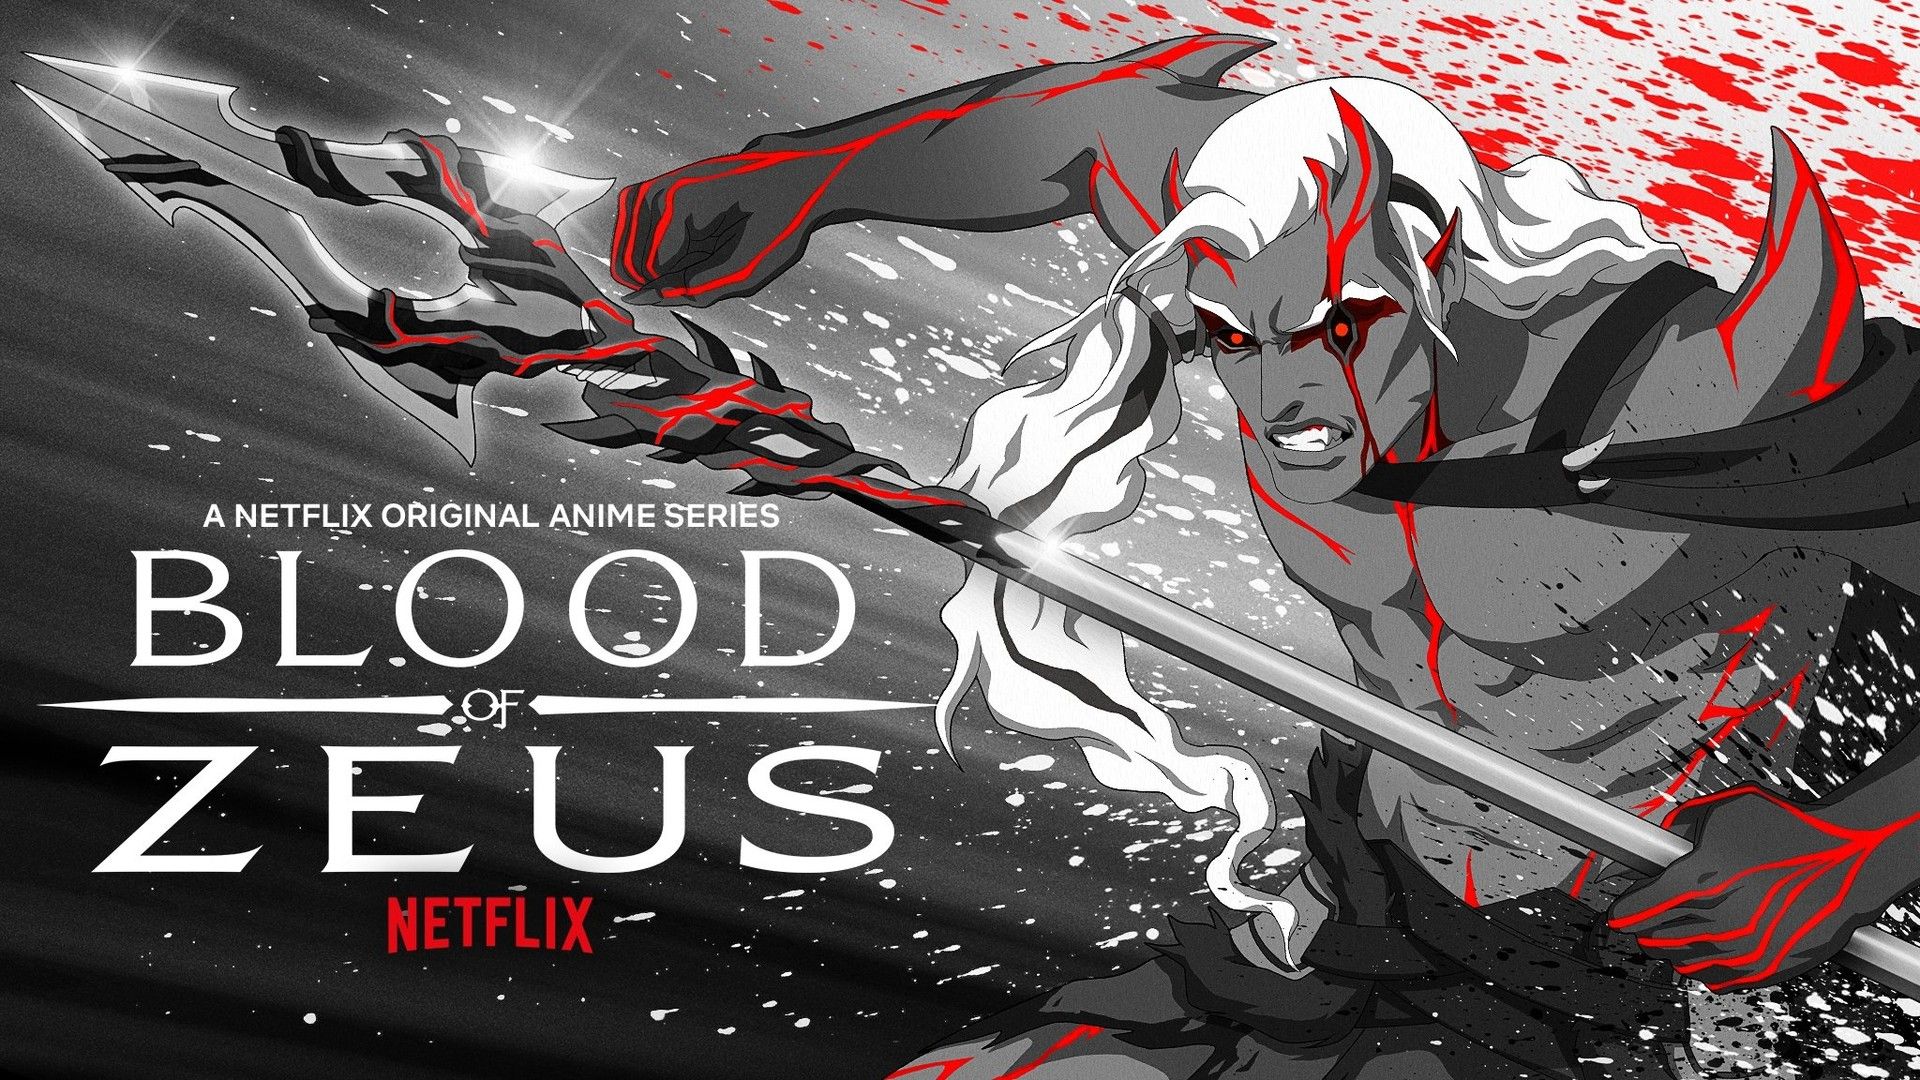 S01 E01. Blood of Zeus Season Episode 1 NETFLIX